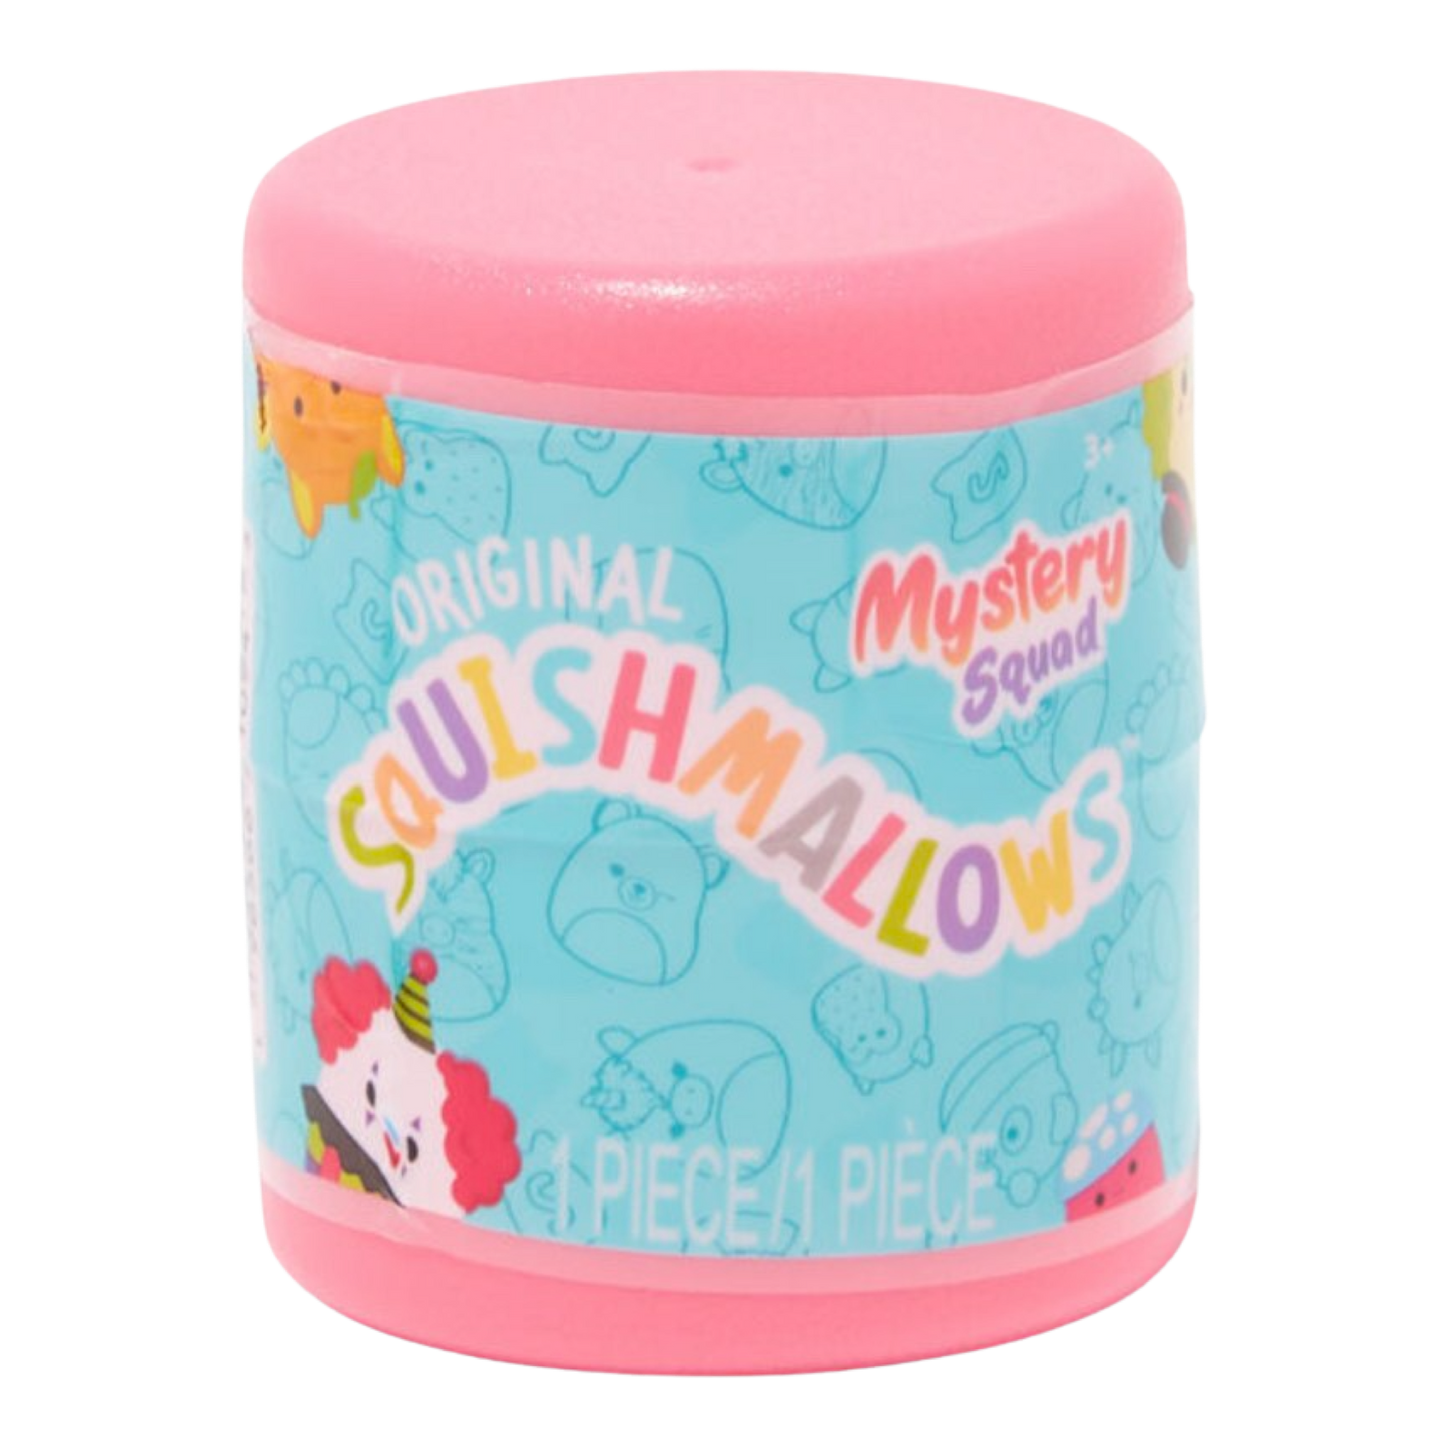 Squishmallow Mystery Squad Micromallow